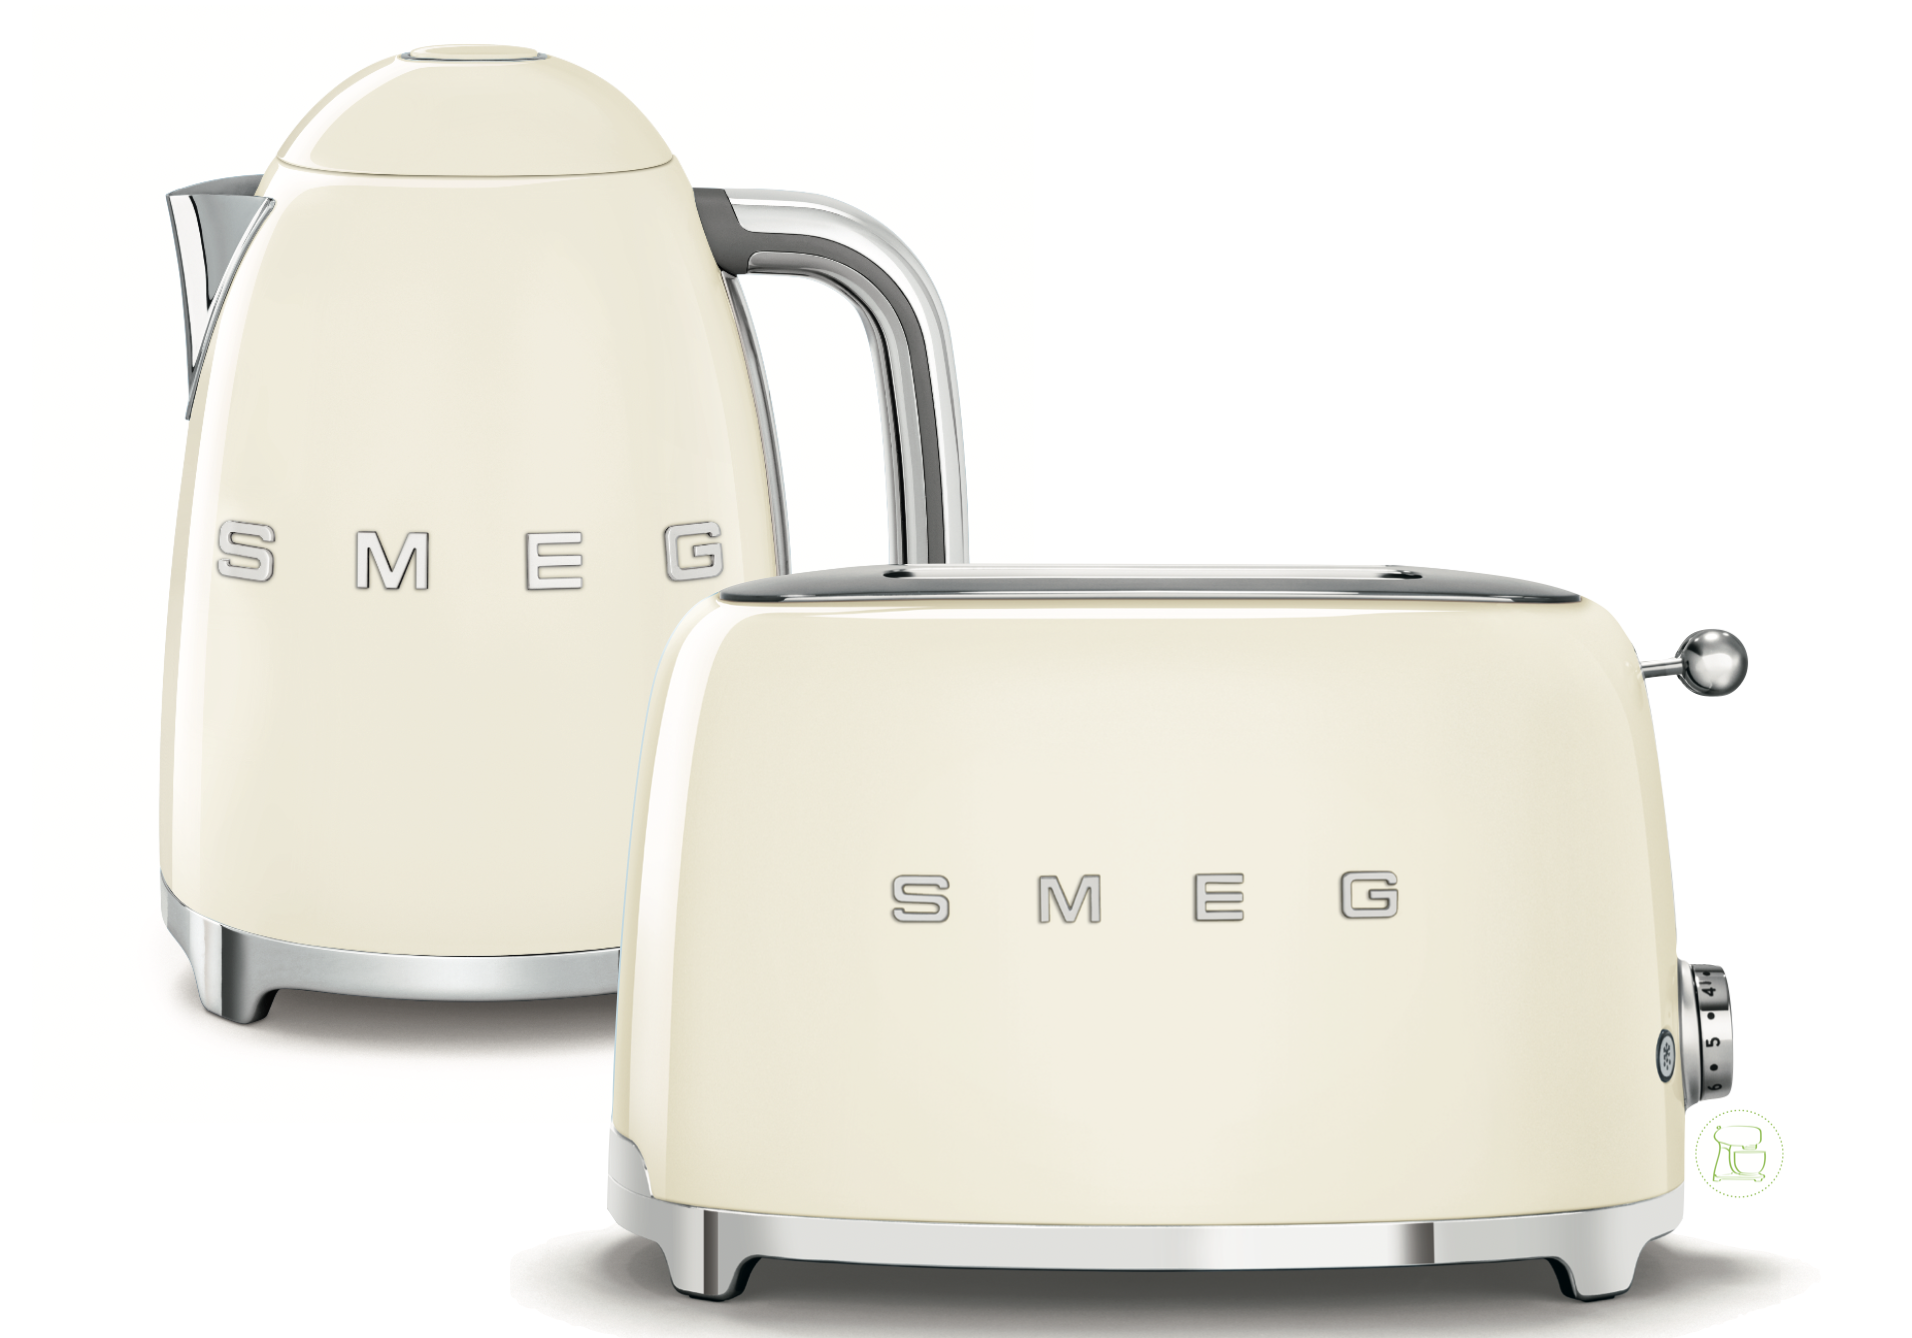 SMEG Wasserkocher - Toaster Set Creme